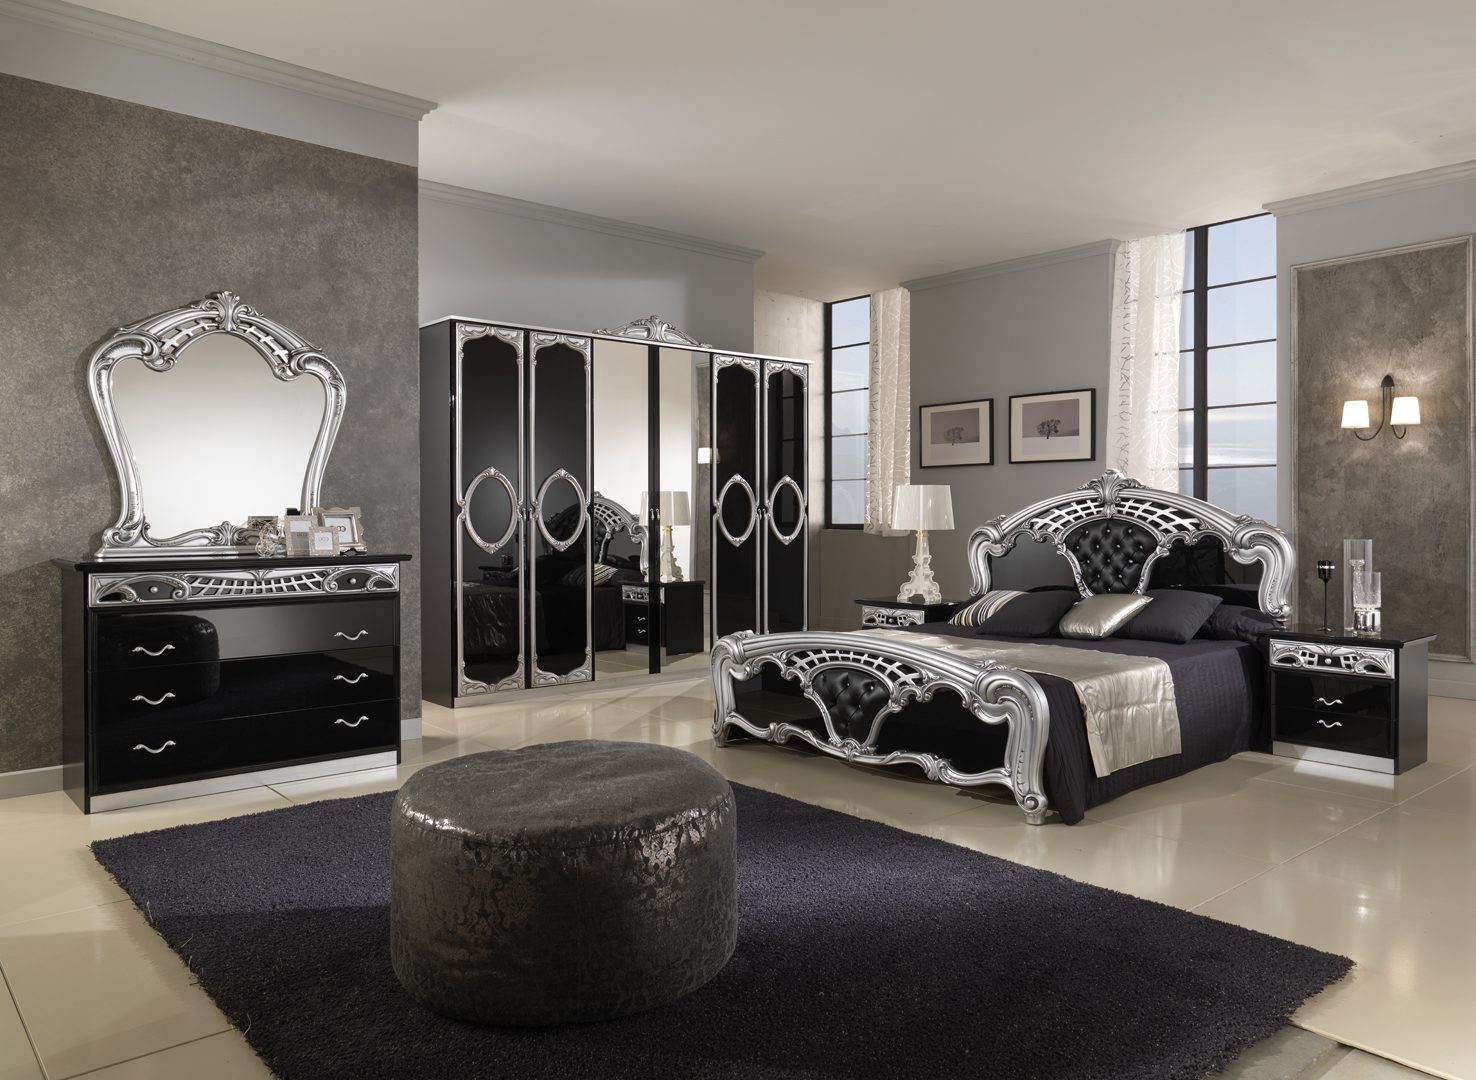 Dormitorio clásico de estilo moderno 